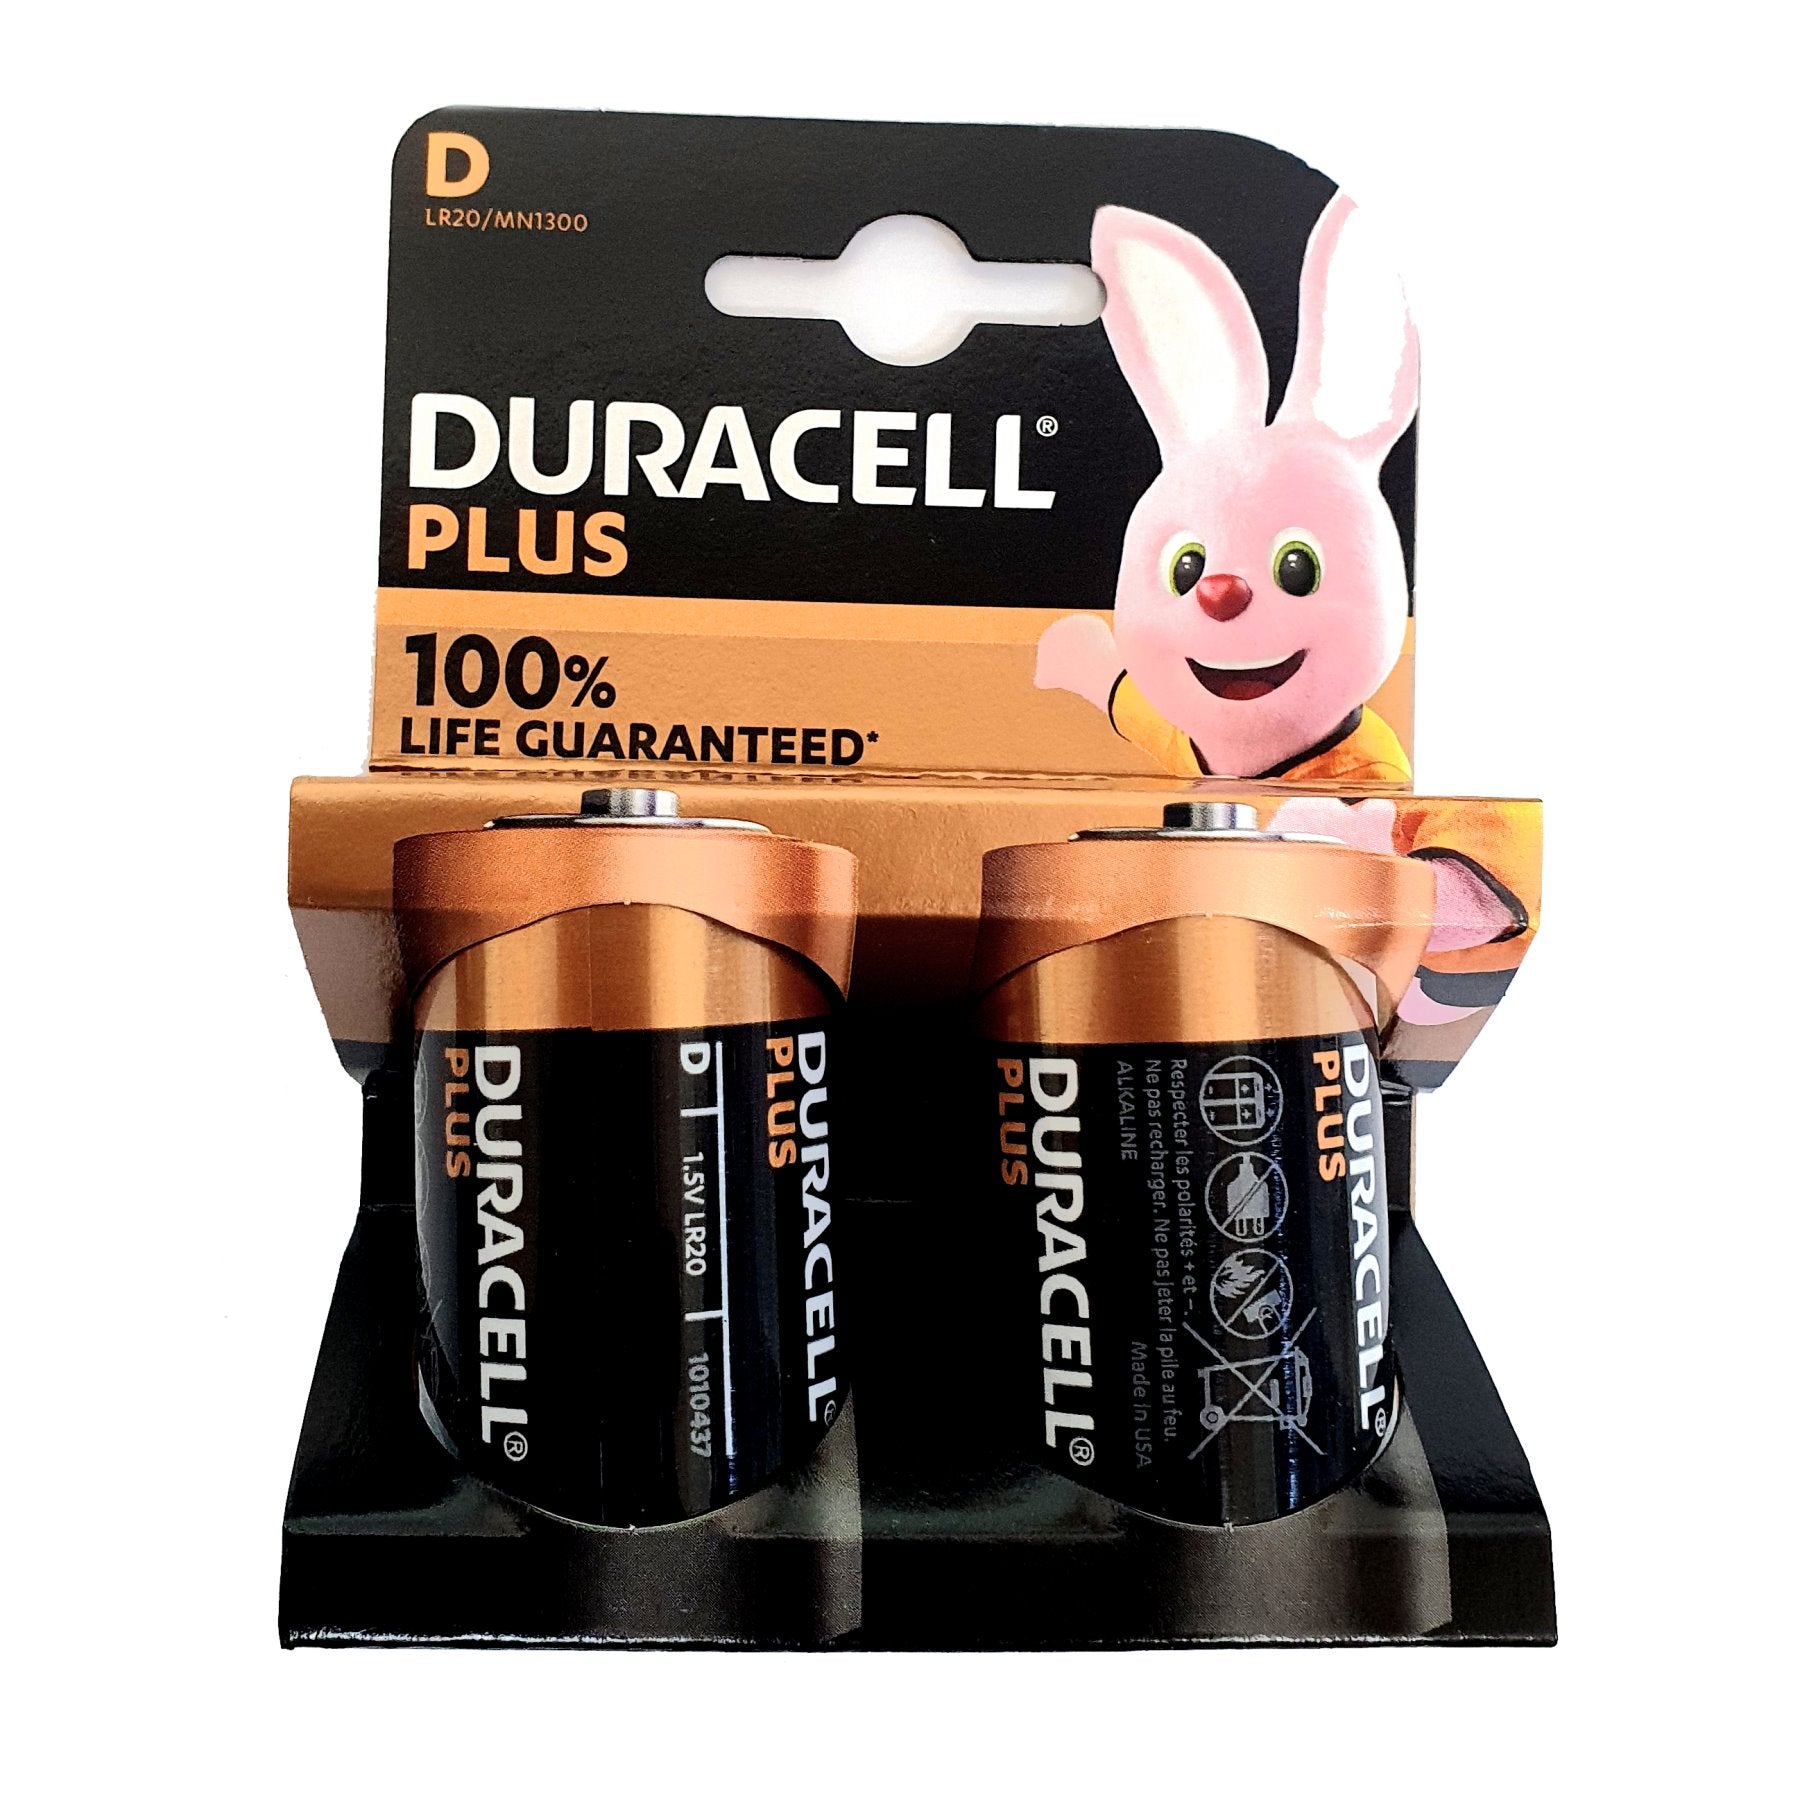 Duracell Plus Power Alkaline Pack of 2 D Battery LR20 MN1300